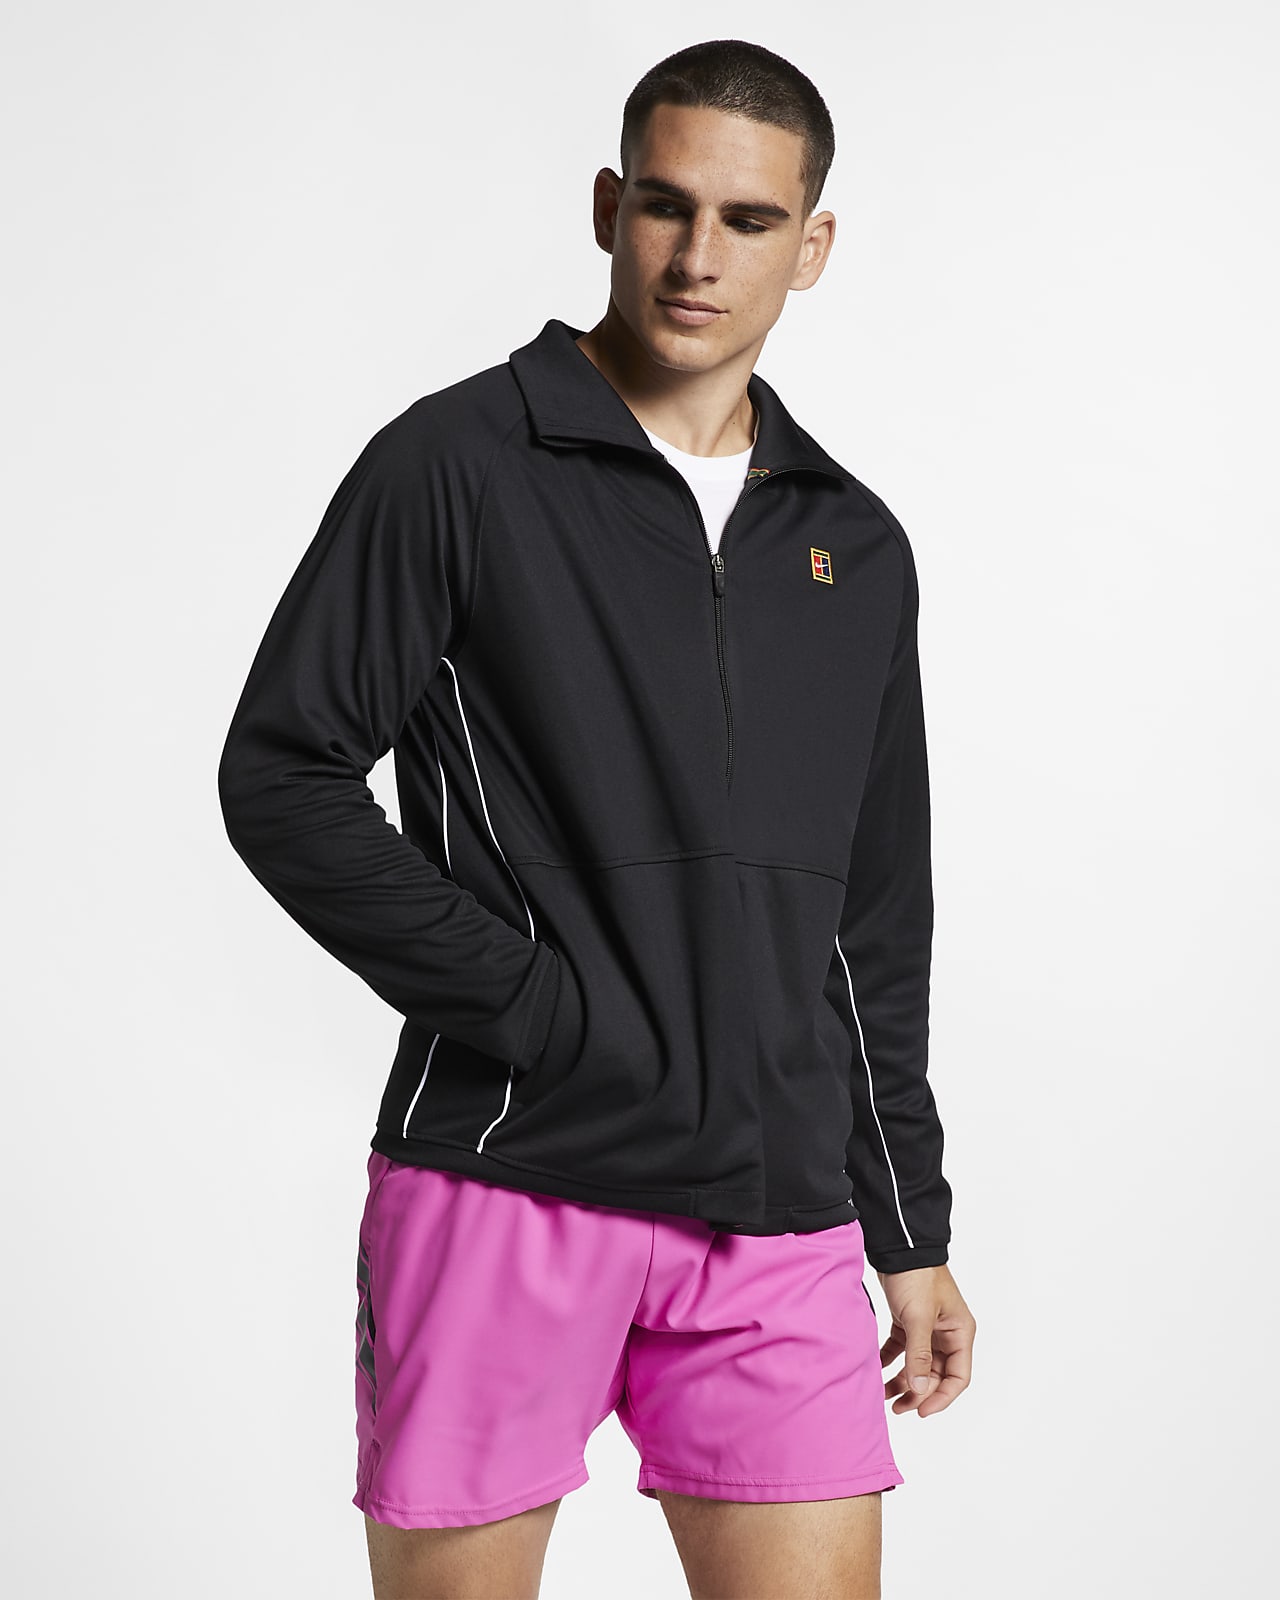 NikeCourt Men's Tennis Jacket. Nike NO